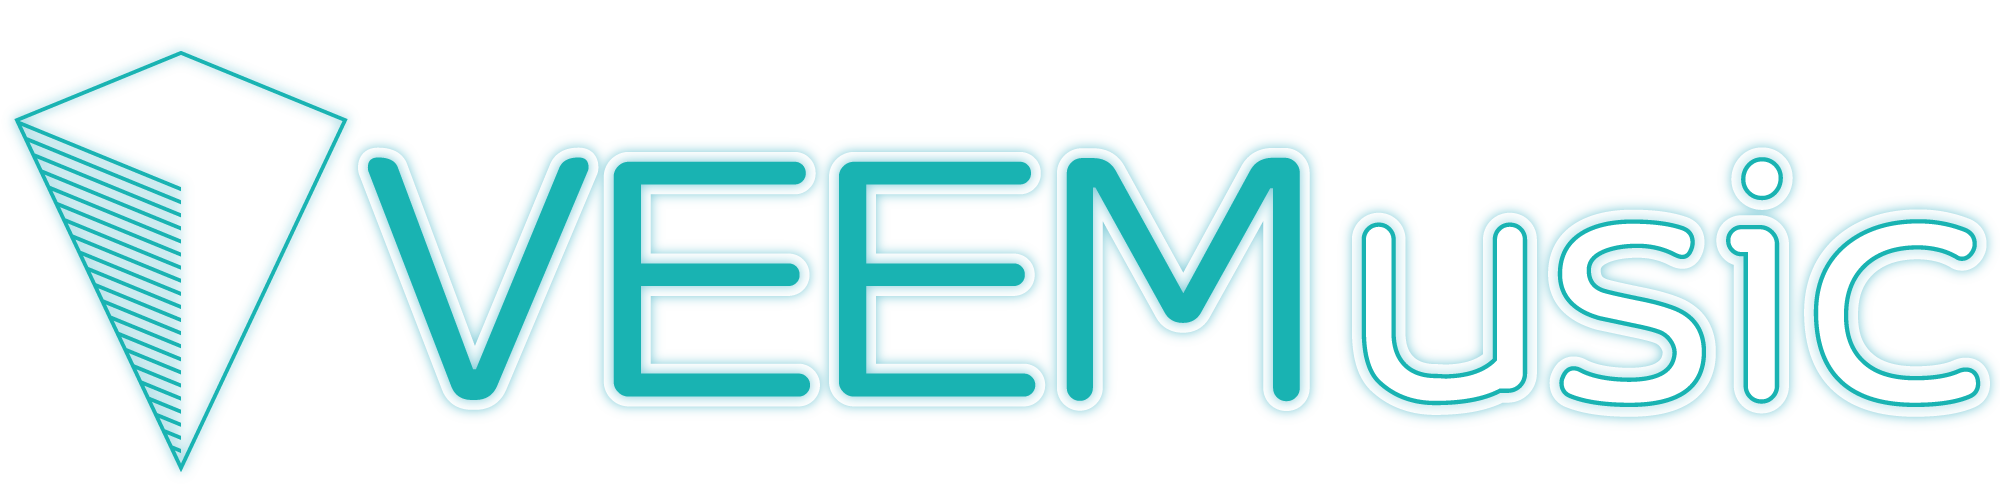 VEEM_logo